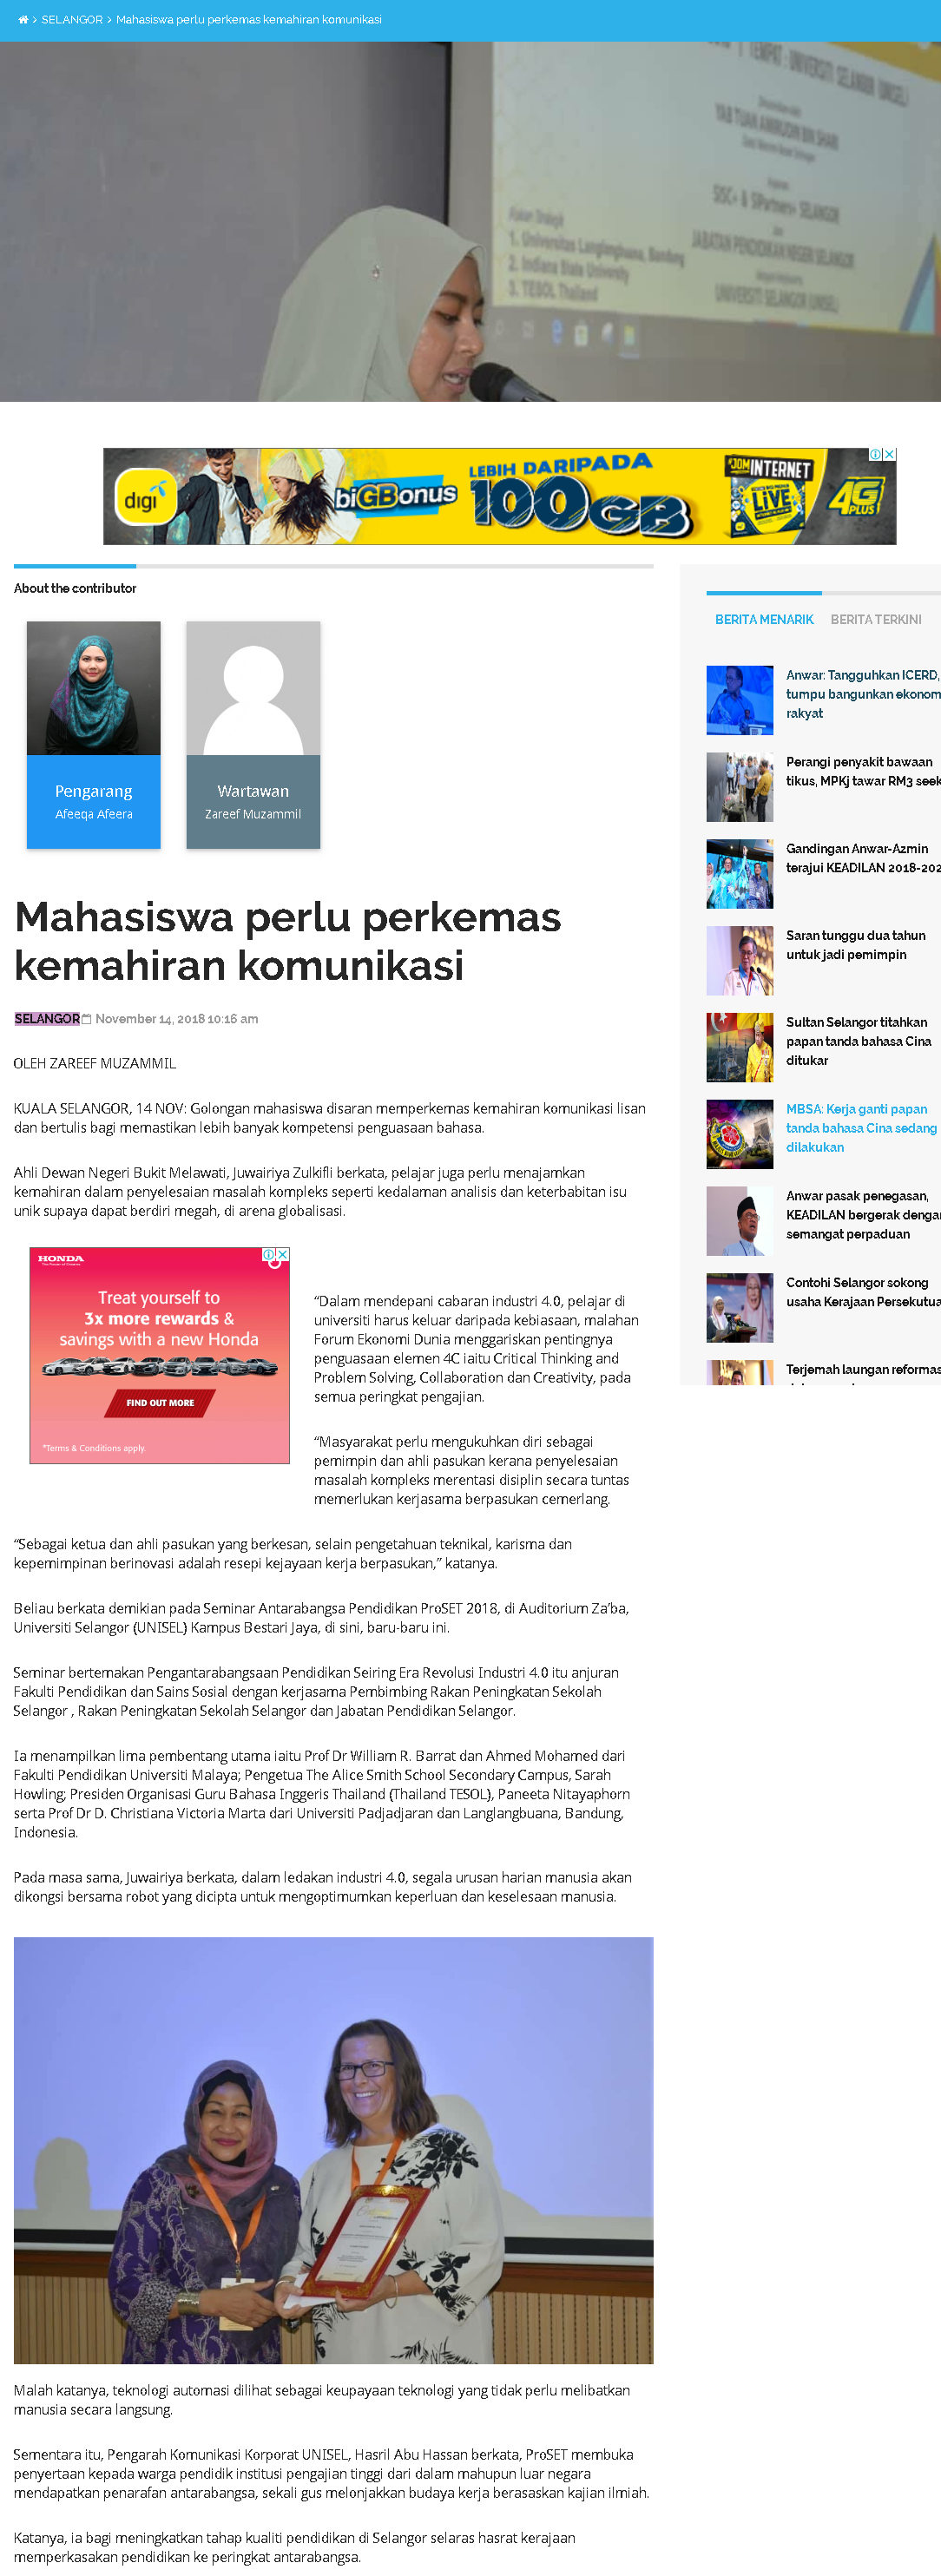 Selangorkini Online - 14 November 2018